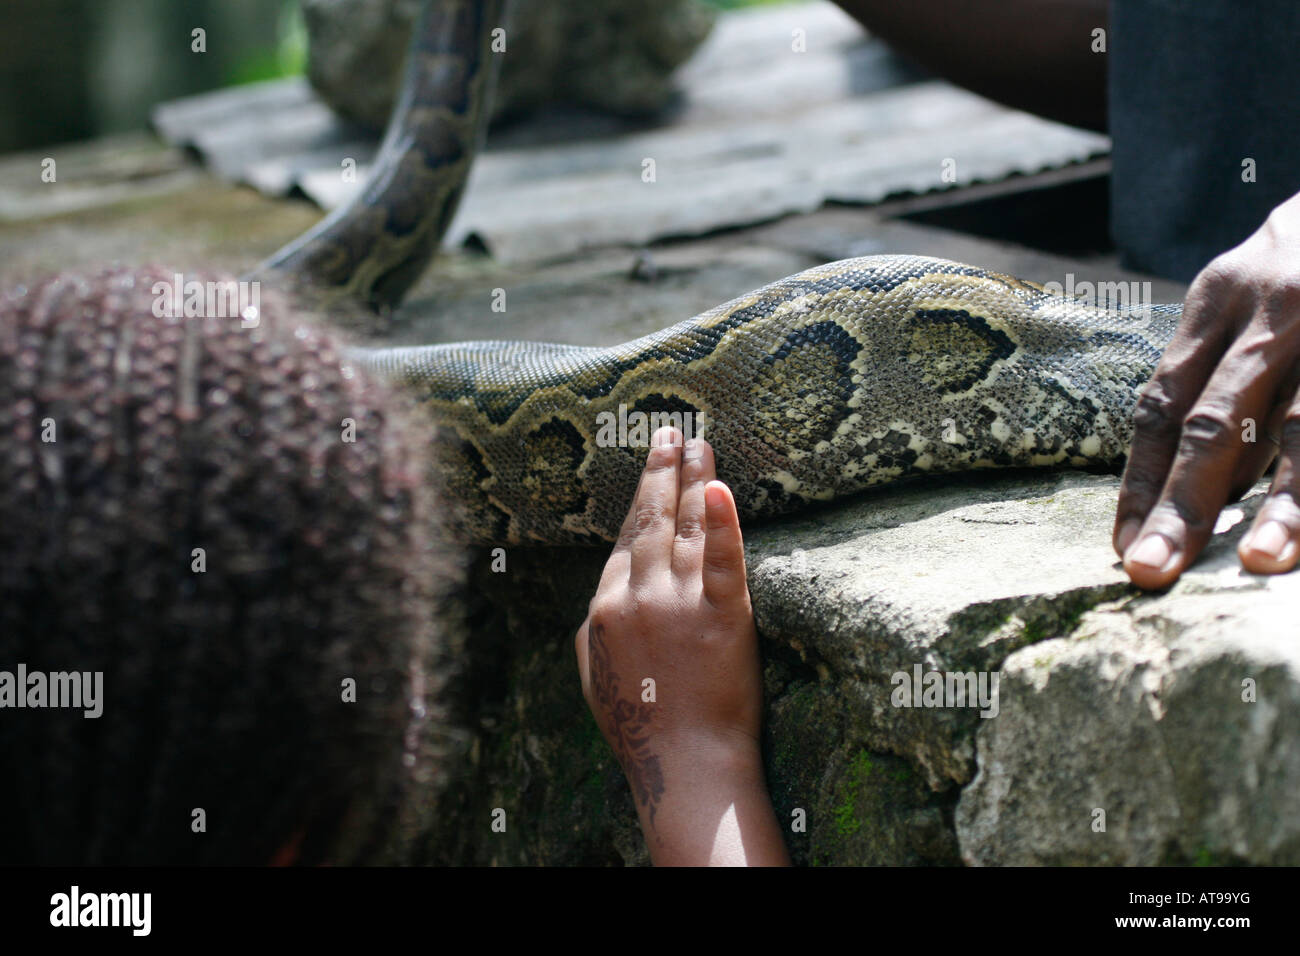 Kind berühren eine afrikanische Rock Python auf Sansibar, Tansania Stockfoto